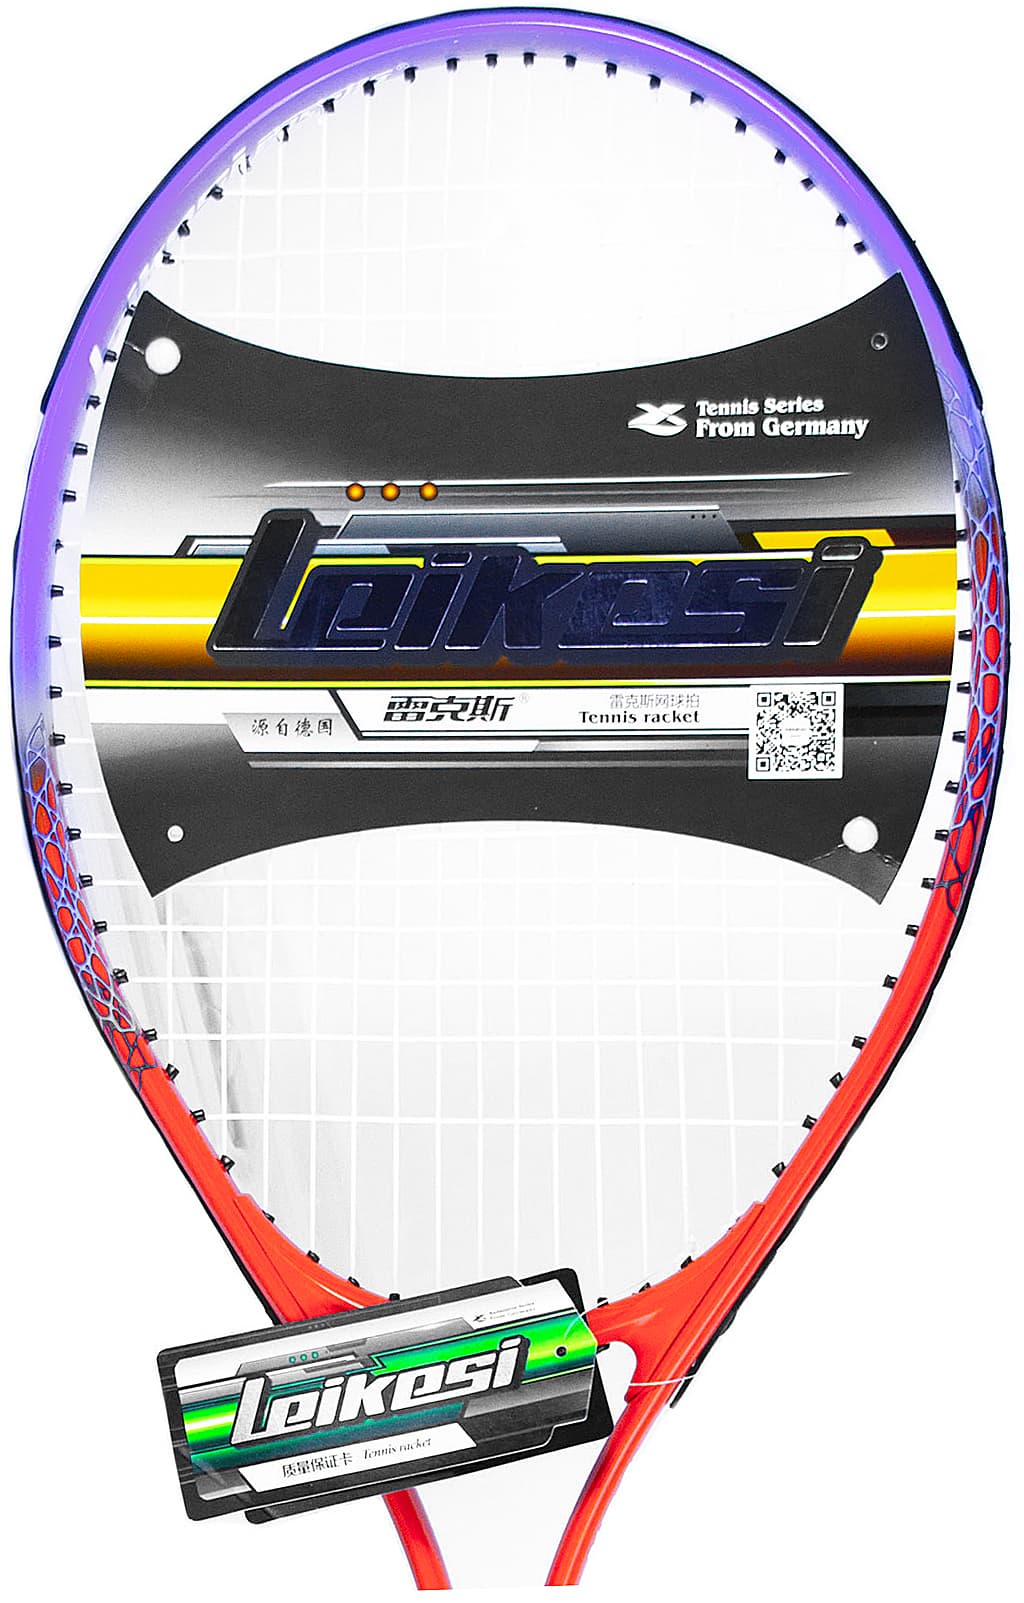 Ракетка Leikesi для большого тенниса LX-390 в чехле / оранжевая